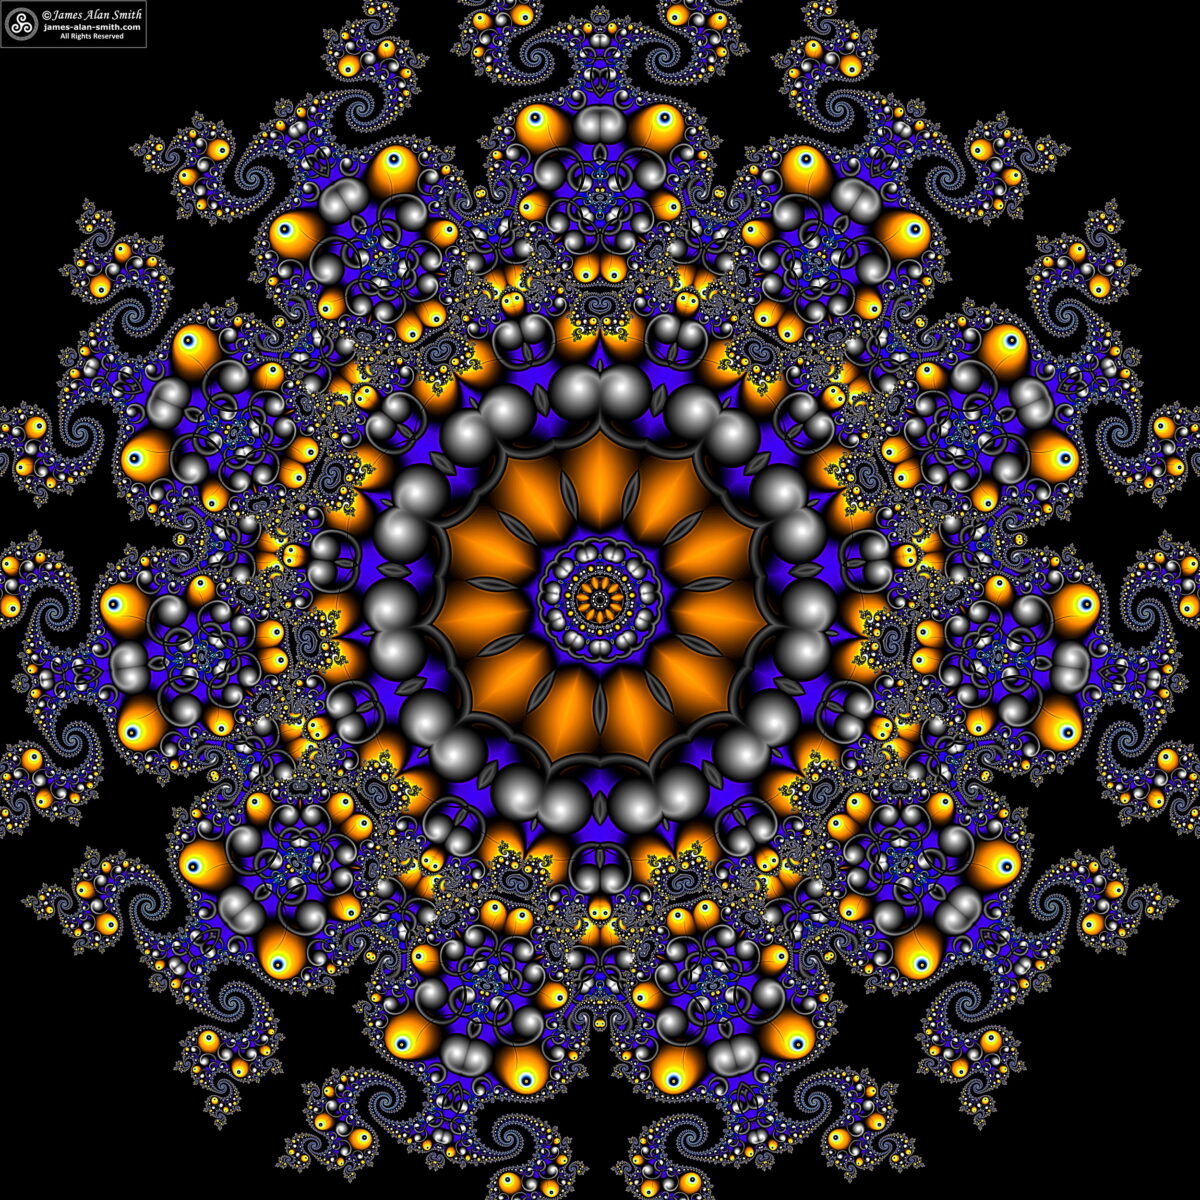 Layers of Infinity Mandala: Artwork by James Alan Smith